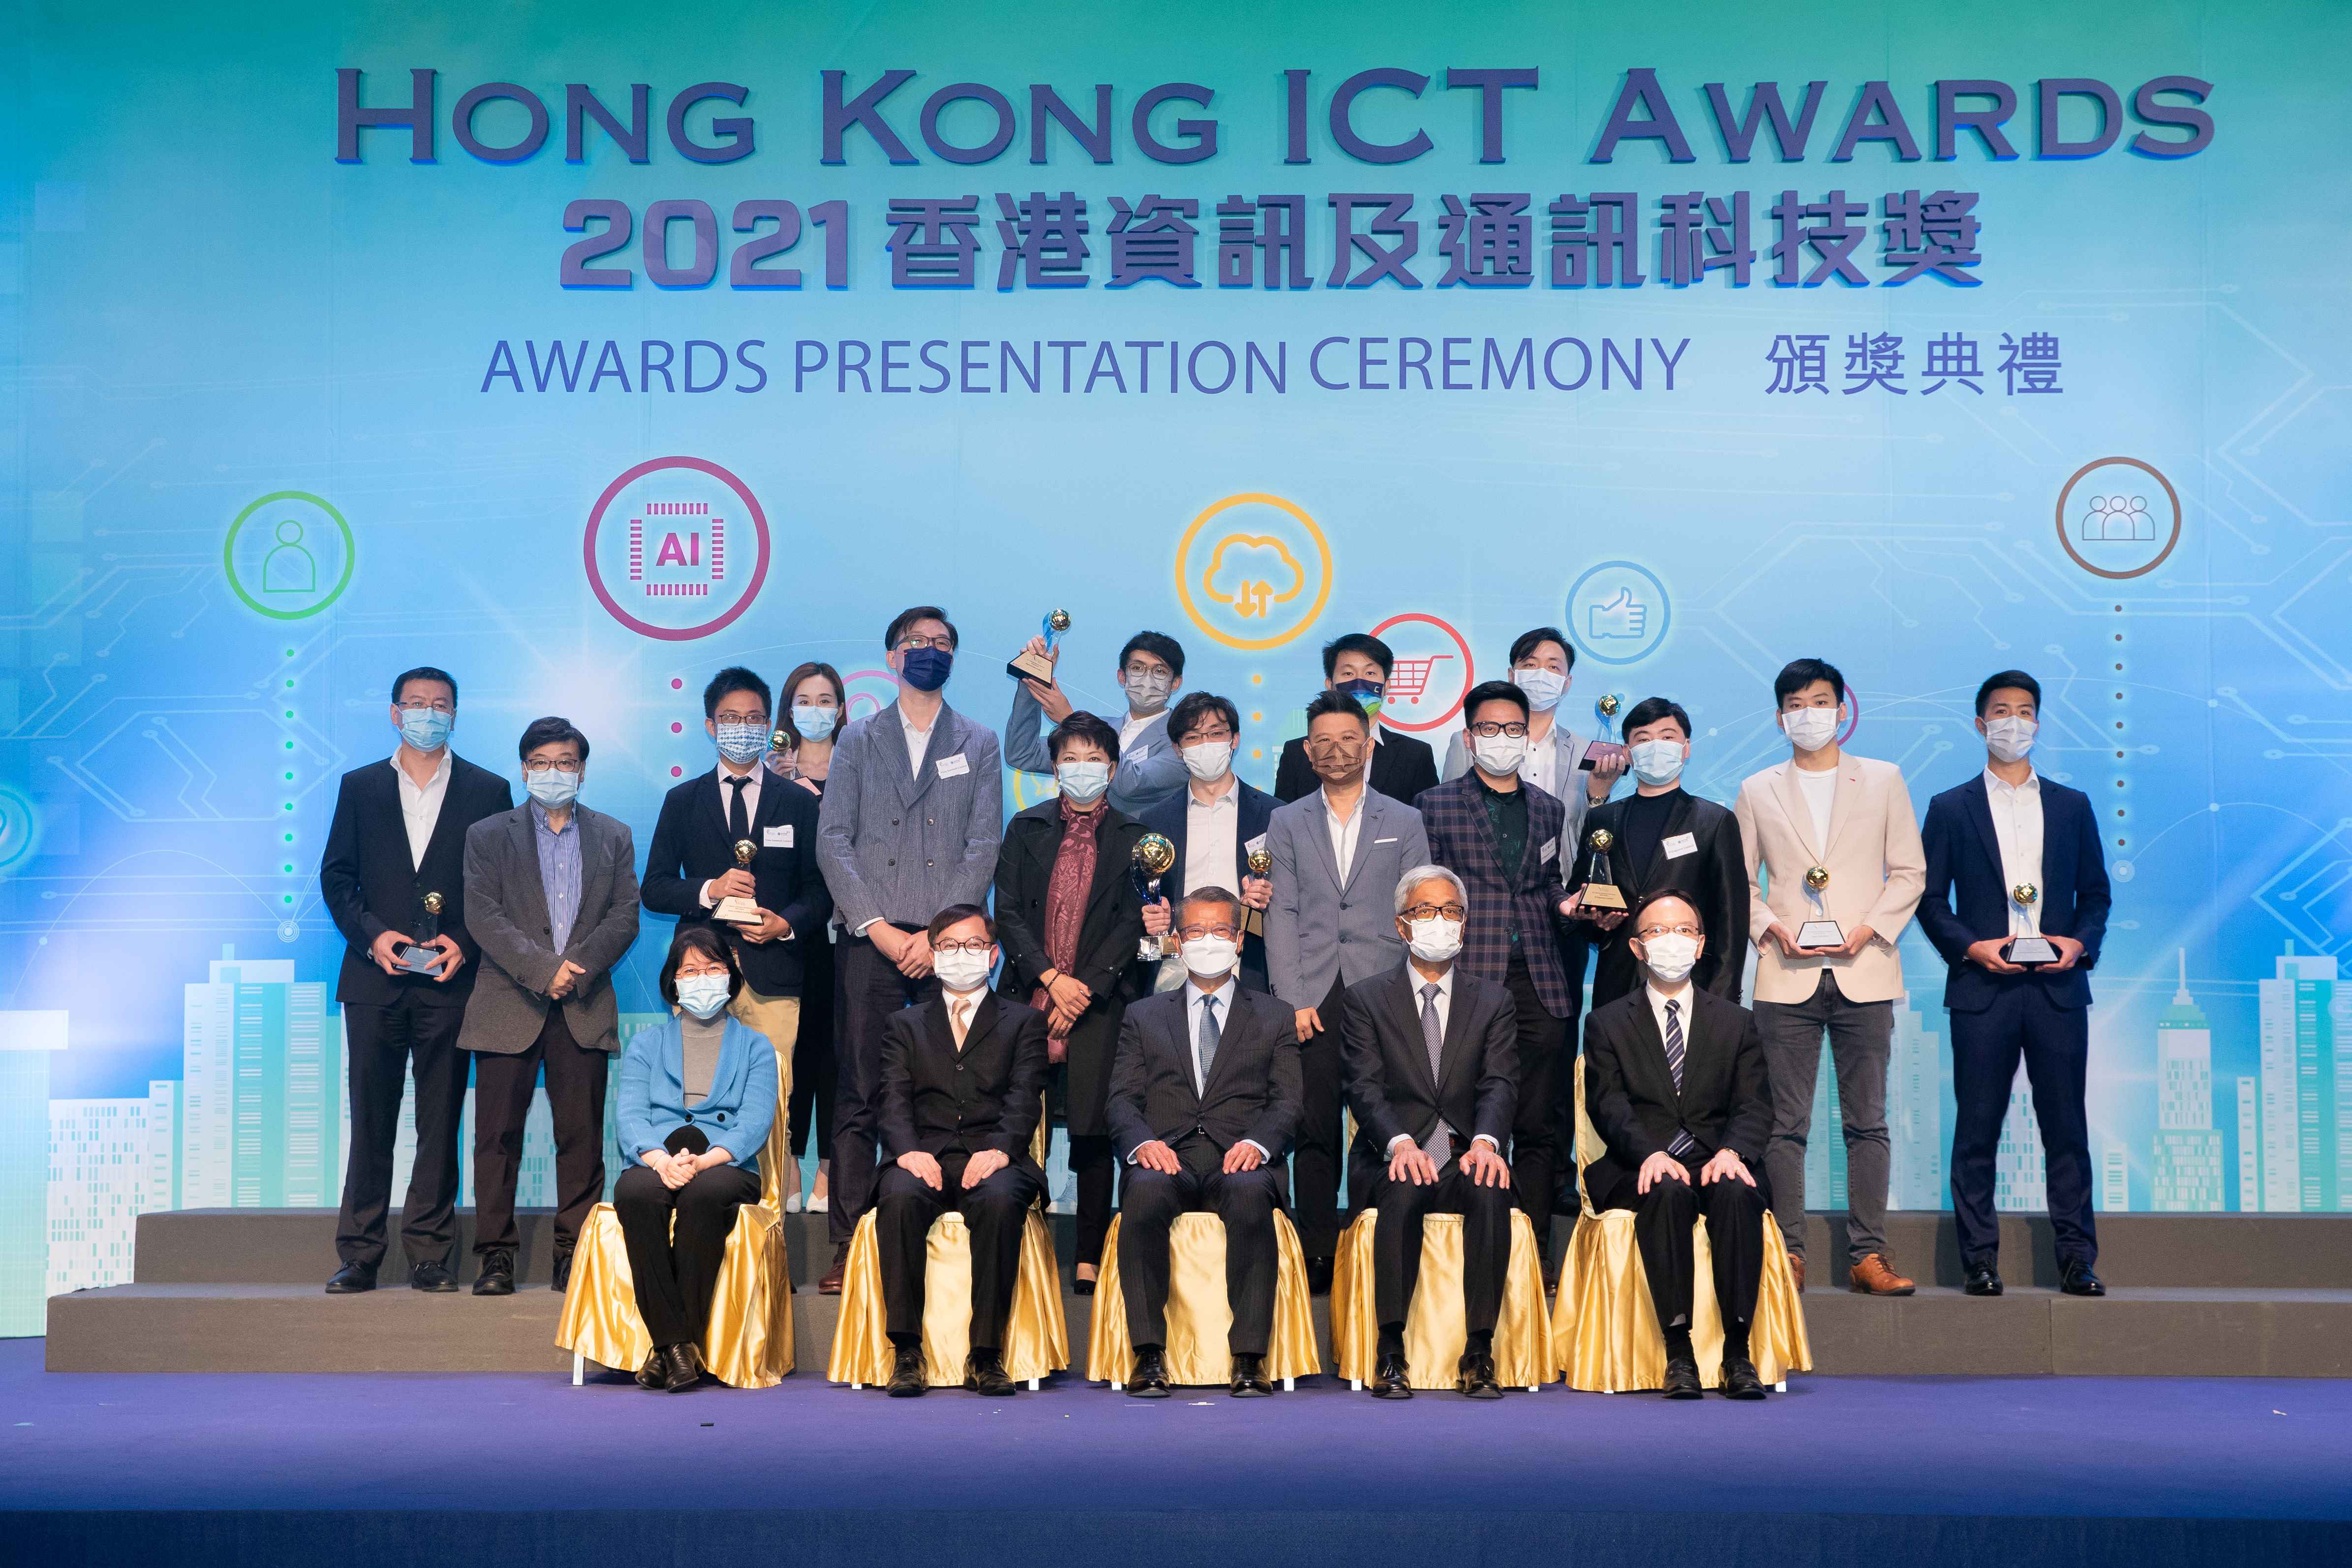 Hong Kong ICT Awards 2021 ICT Startup Award Winners Group Photo